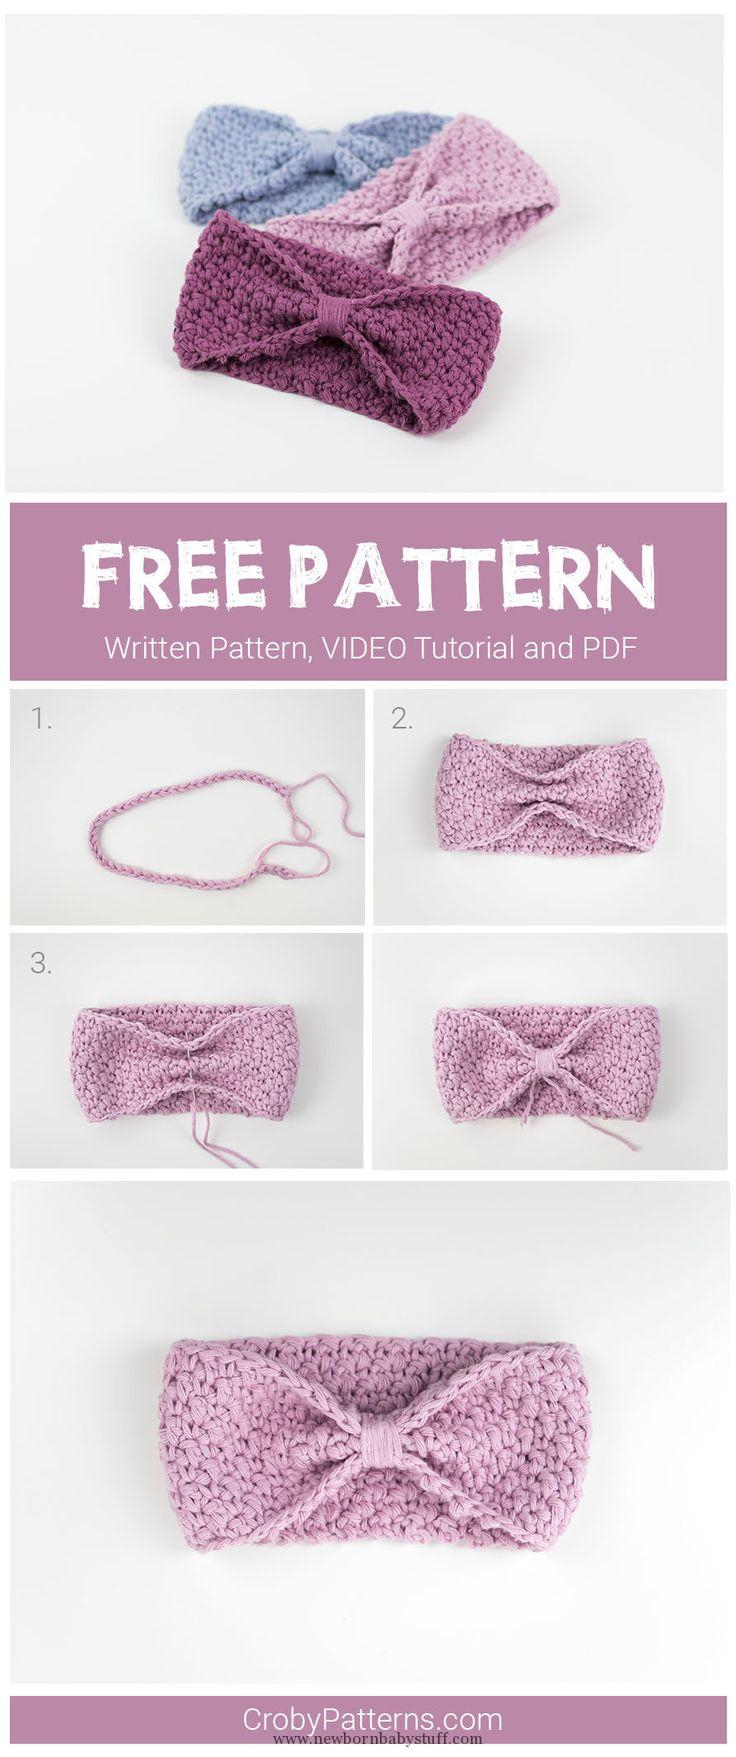 Knitting Headband Pattern Free Ba Knitting Patterns Simple And Easy To Make Crochet Headband For